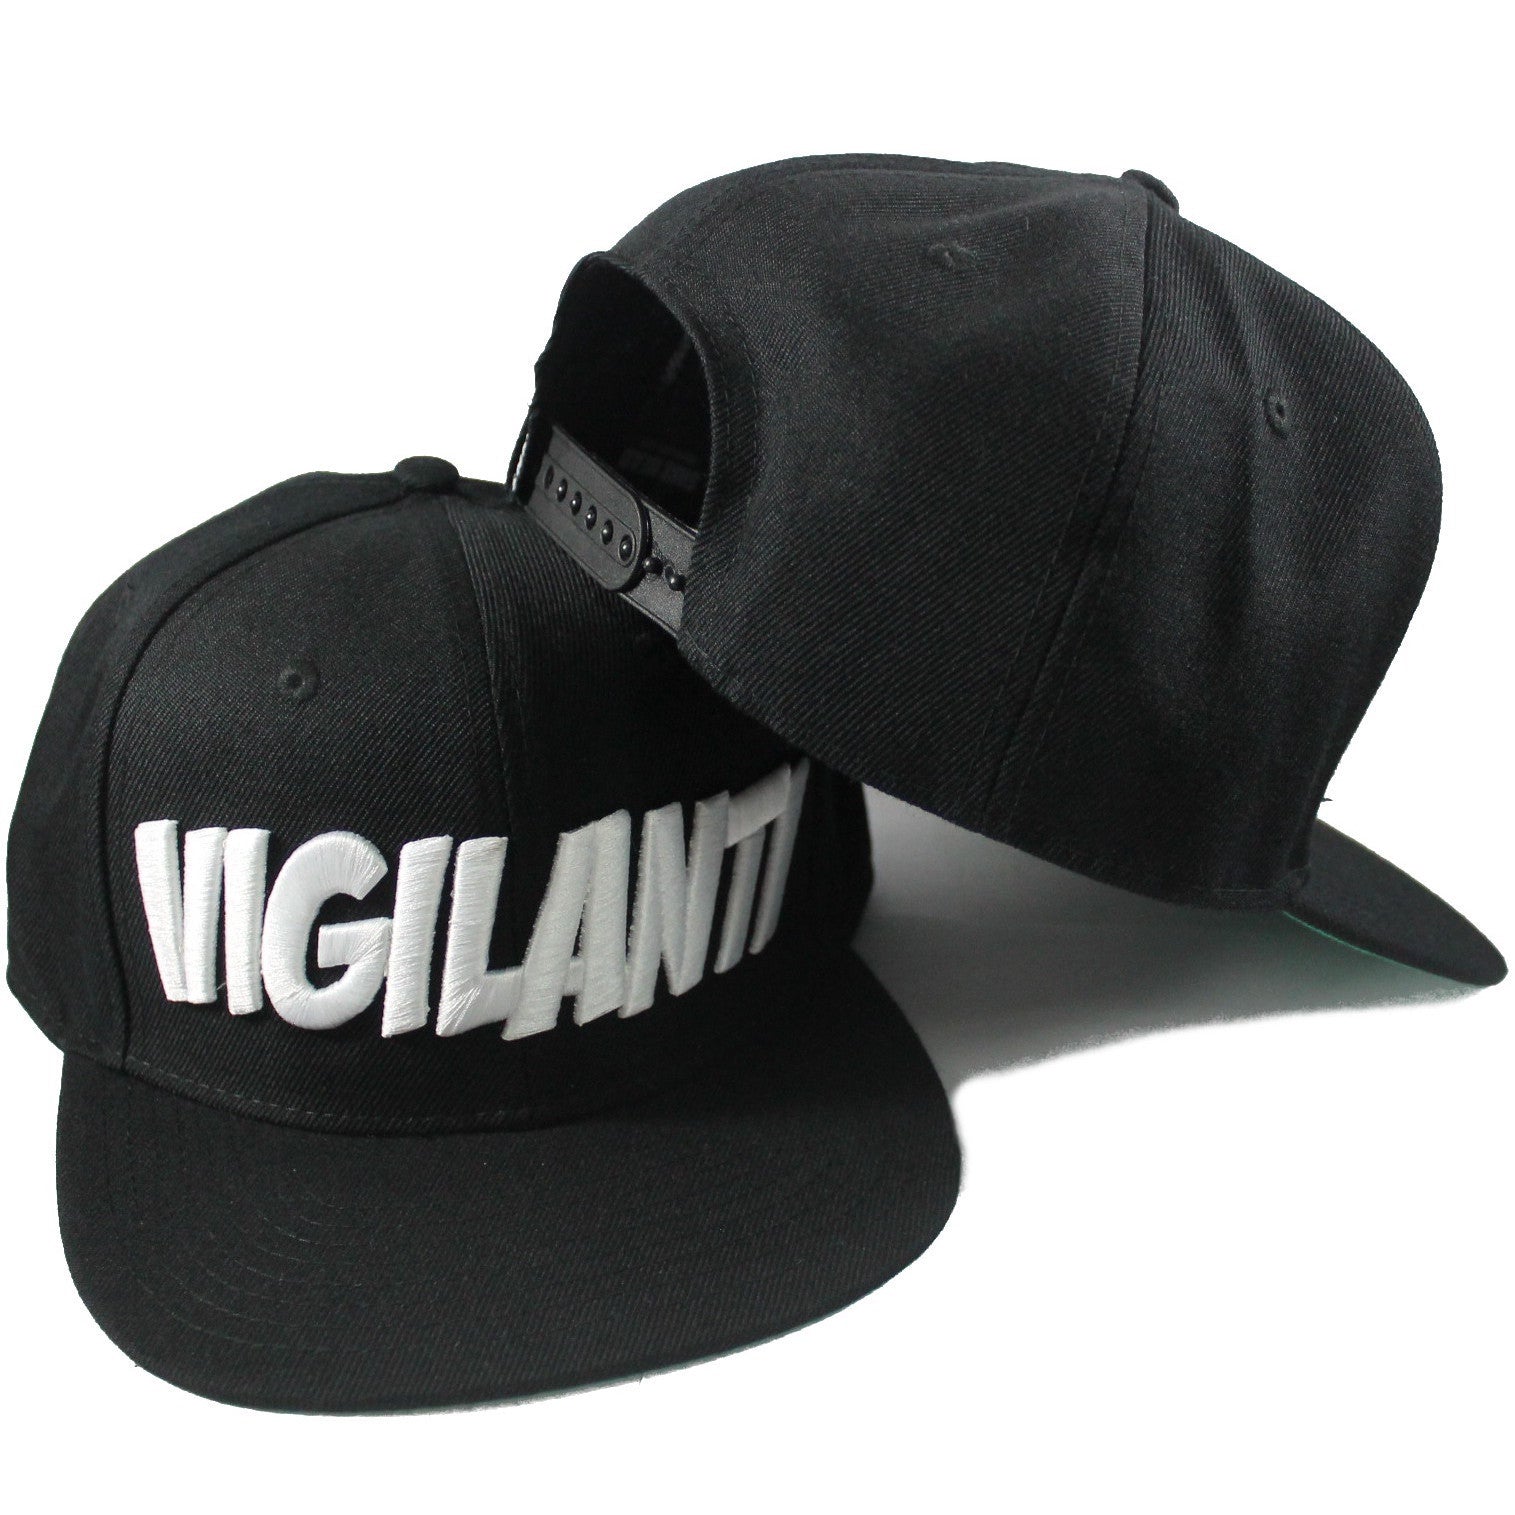 VIGILANTI Snapback Hat